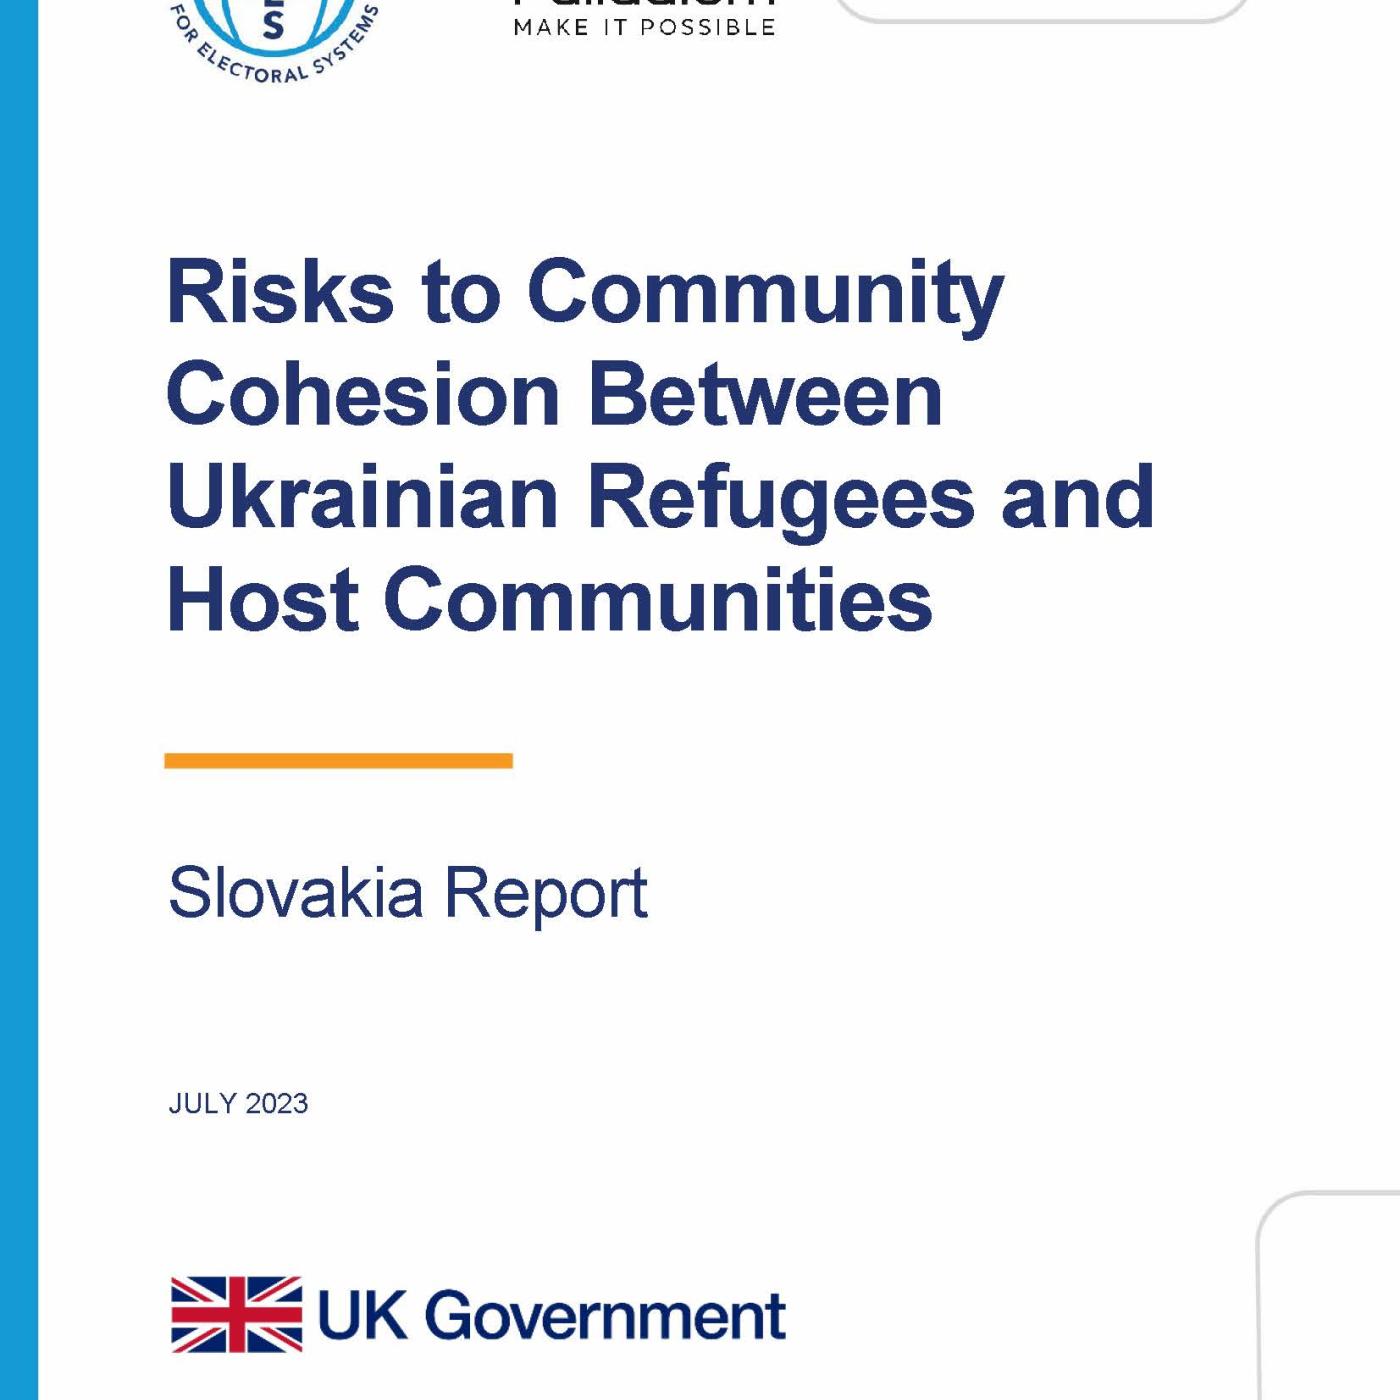 Slovakia cover report